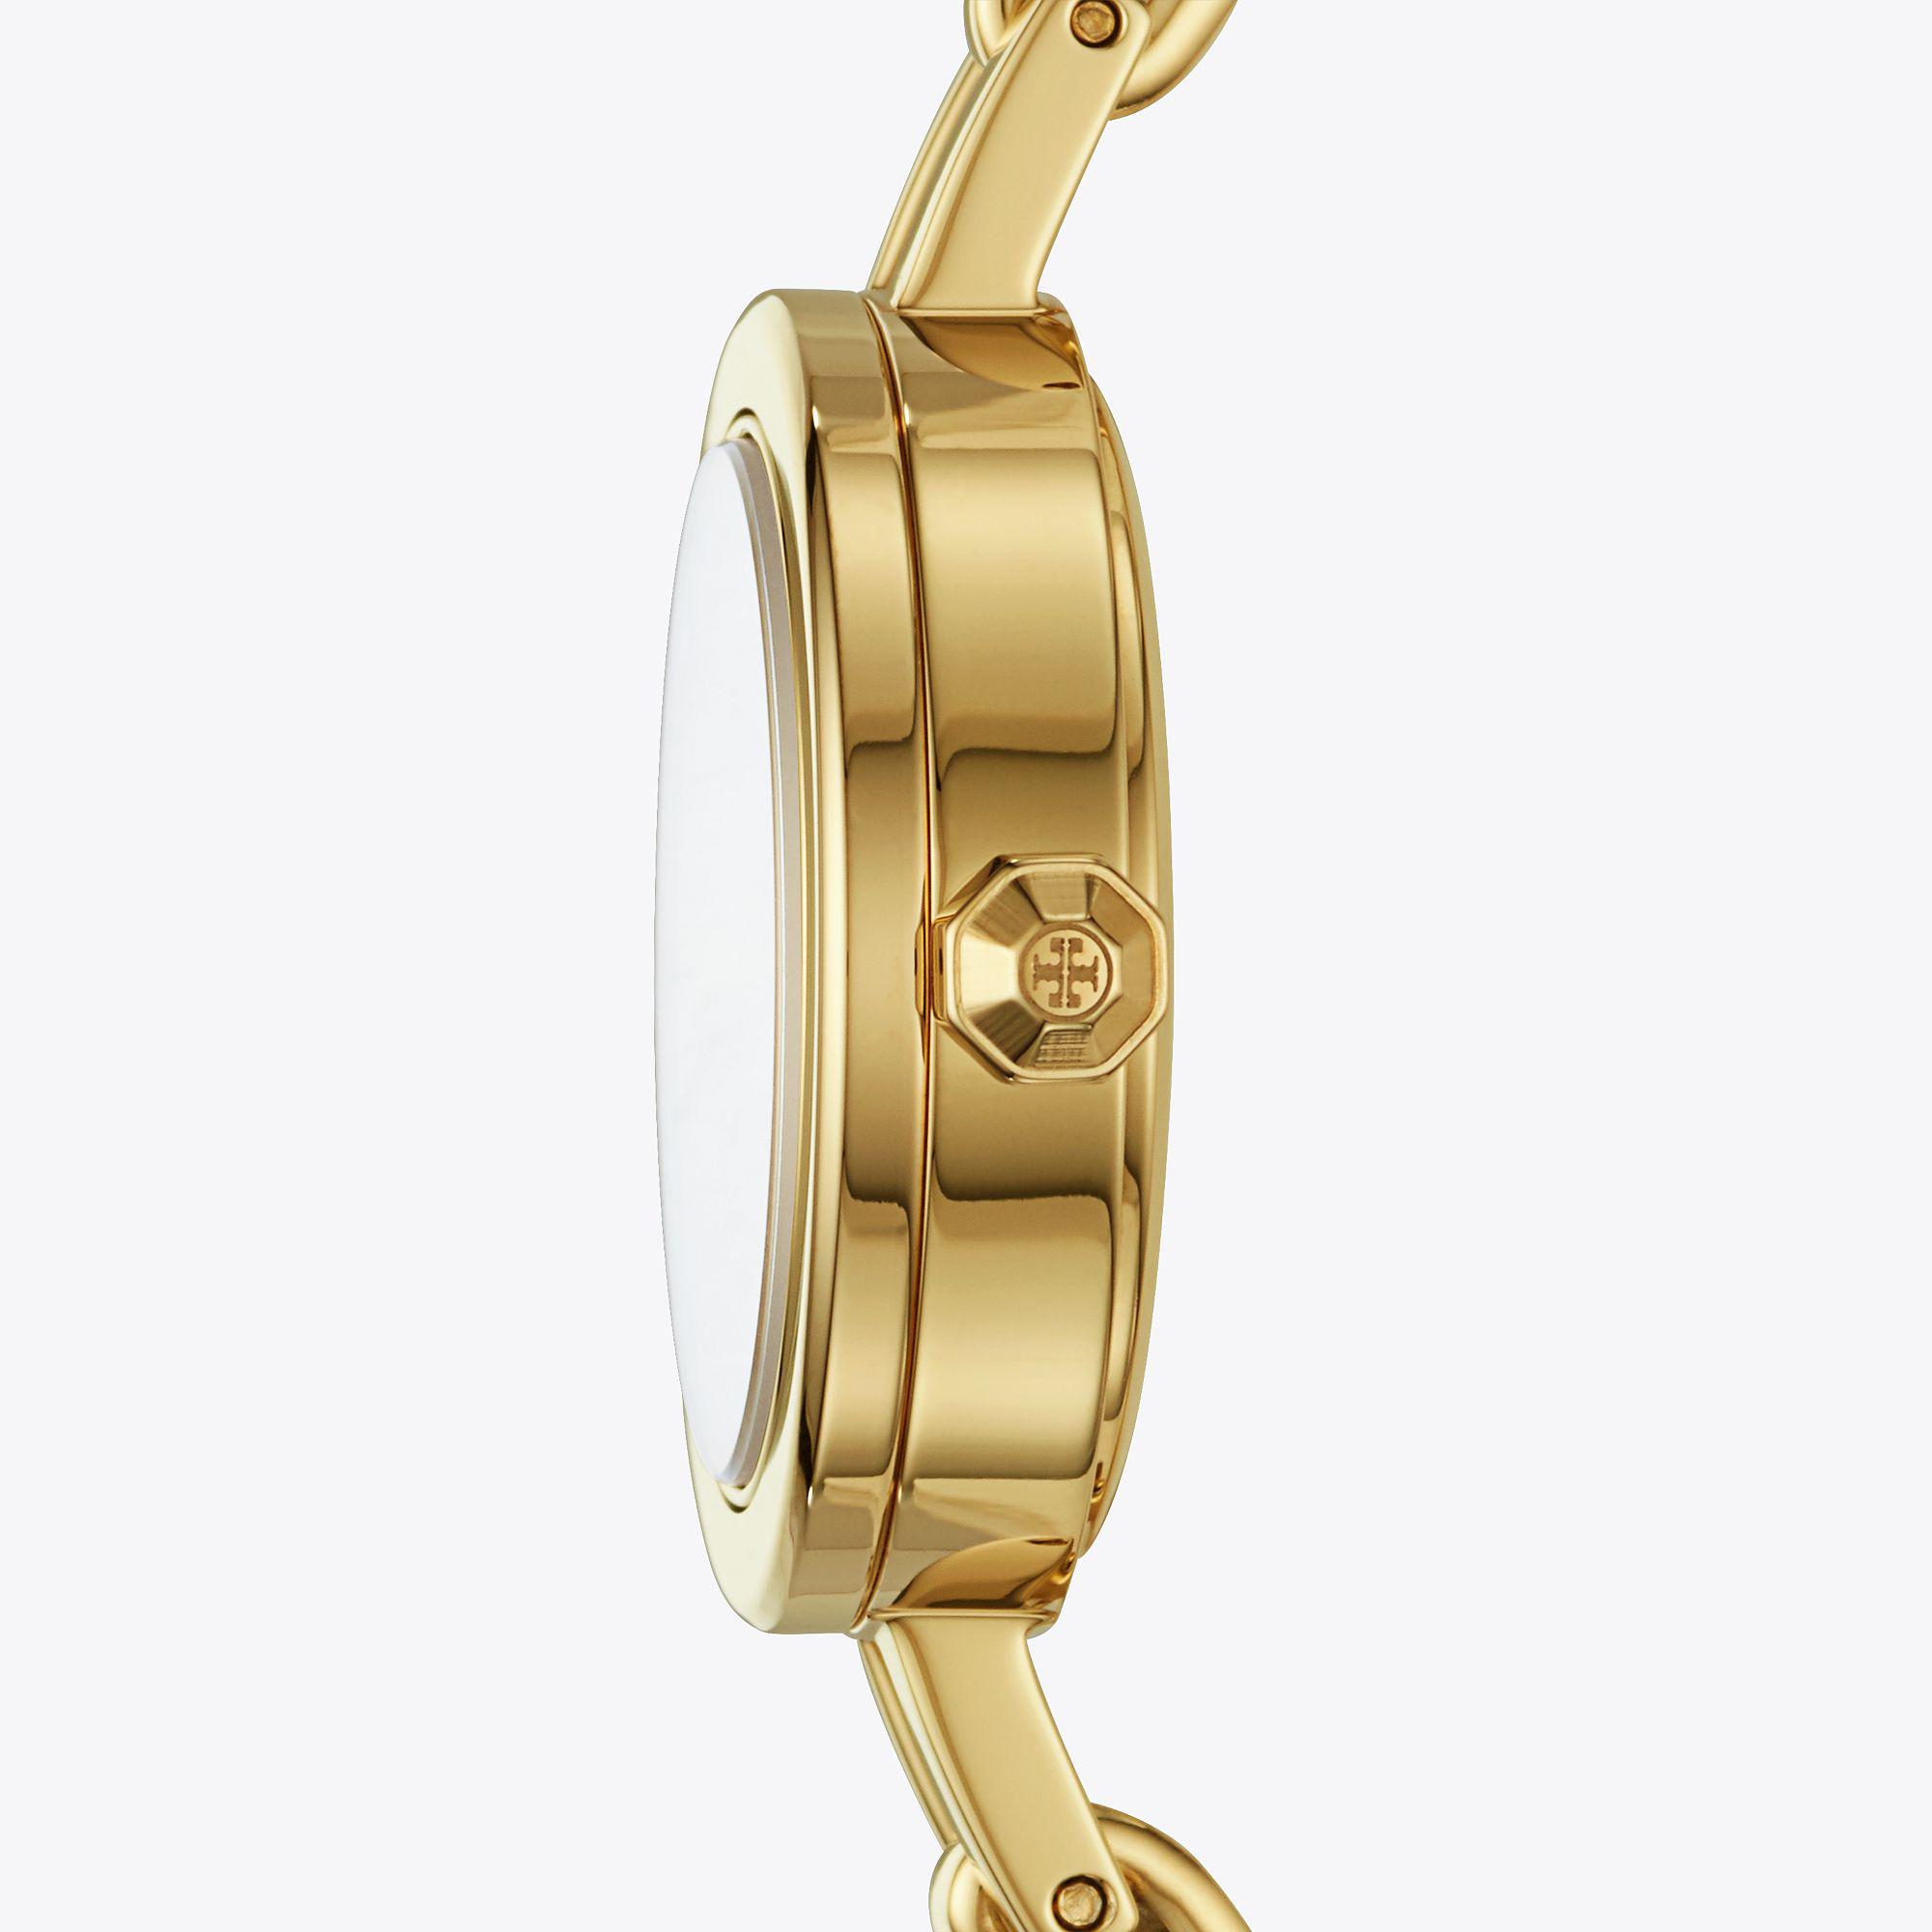 Tory Burch Gigi Bangle Watch, Multi-color/gold-tone, 27 Mm in Metallic |  Lyst